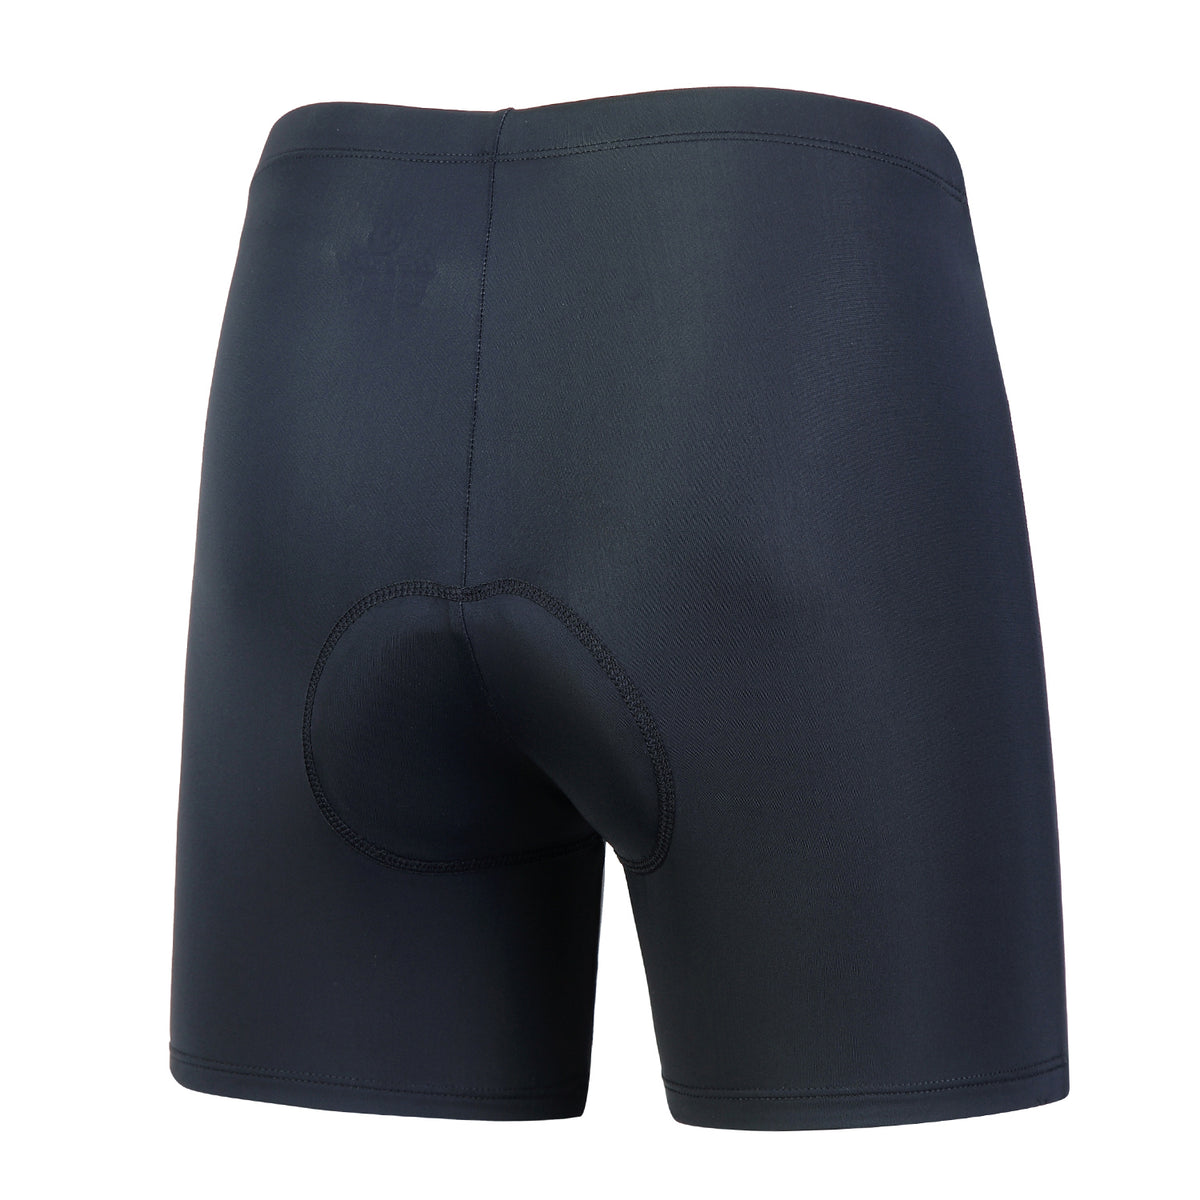 SKYSPER Cycling Underwear Women 3D Gel Padded Cycle Pants Ladies Breathable  Comfortable Bicycle Shorts Black